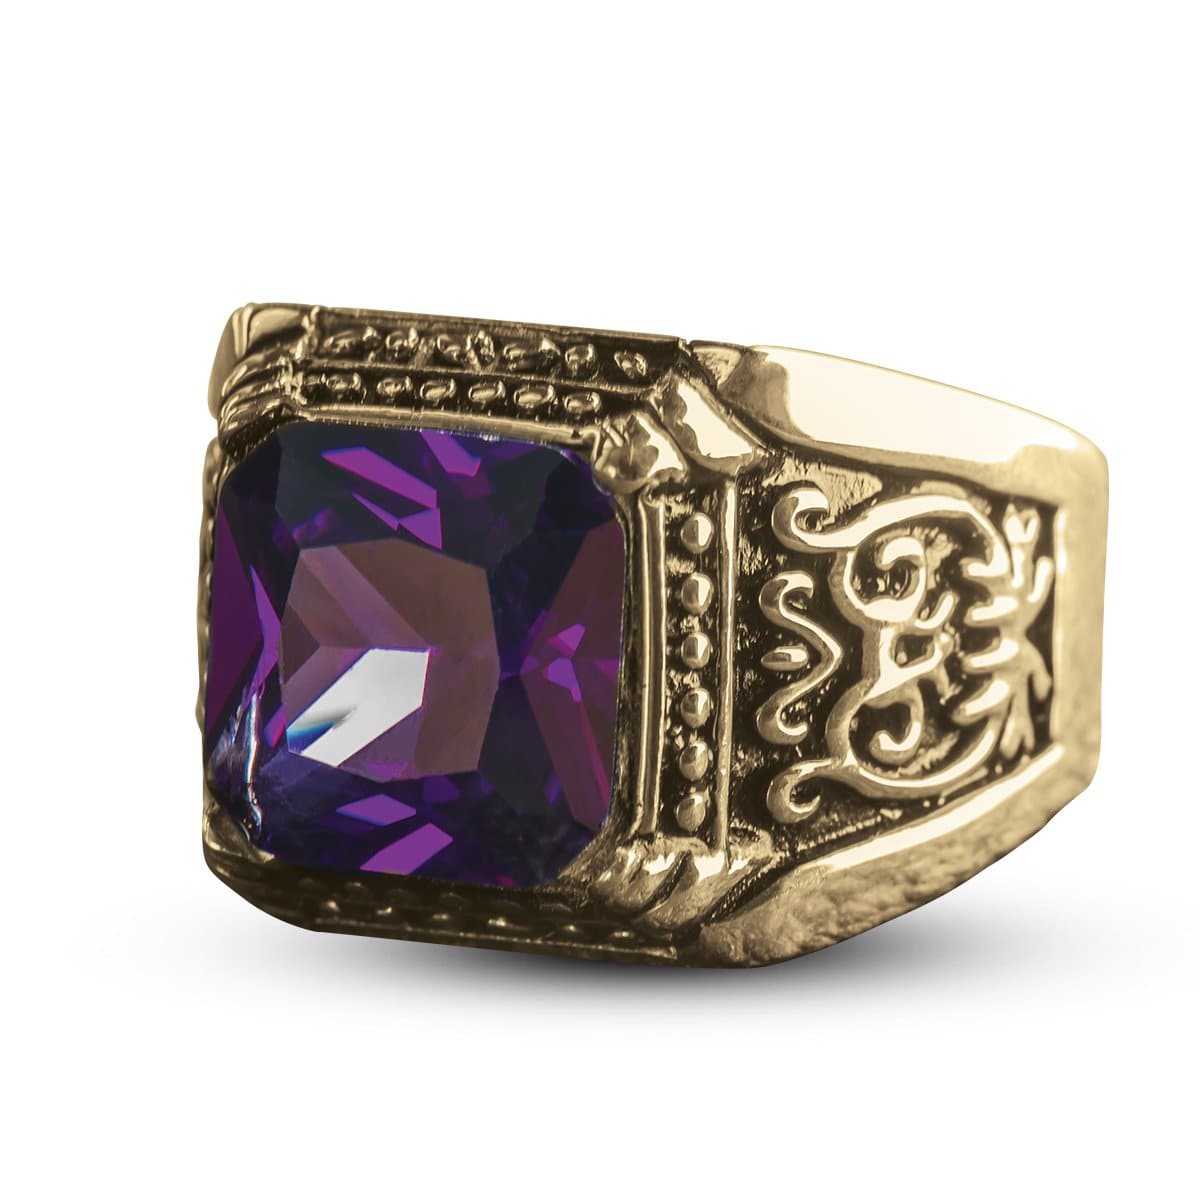 Daniel Steiger Augustus Purple Ring